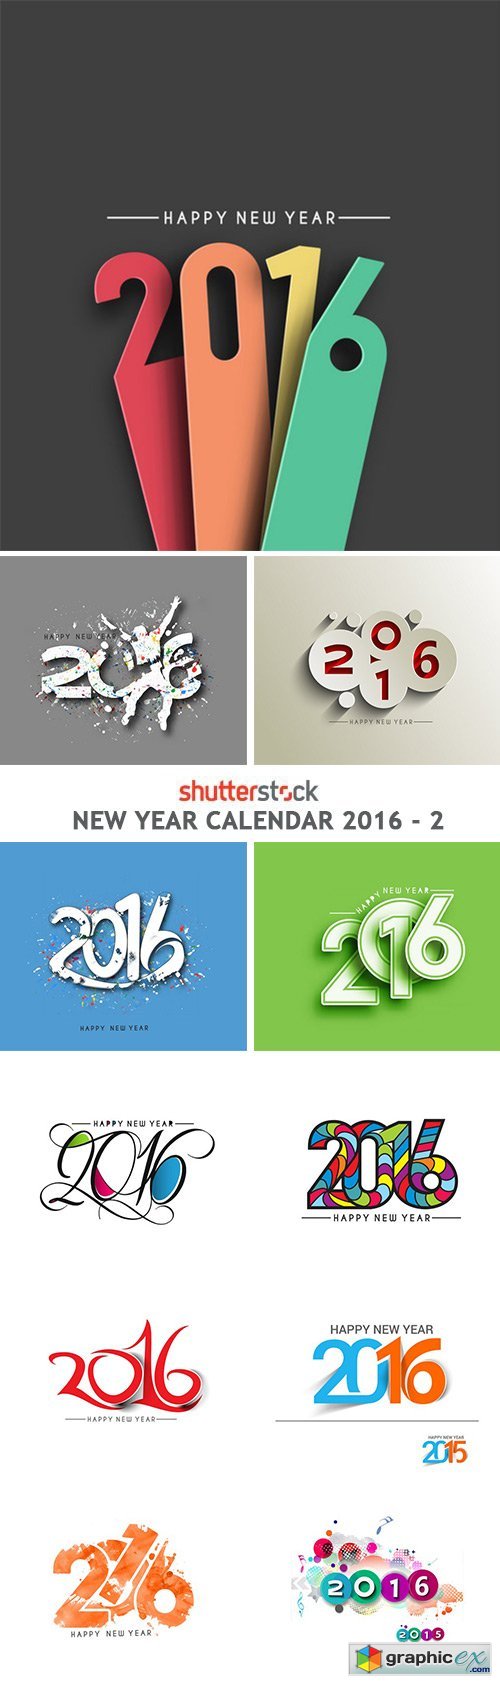 New Year Calendar 2016 - 2 - 25xEPS